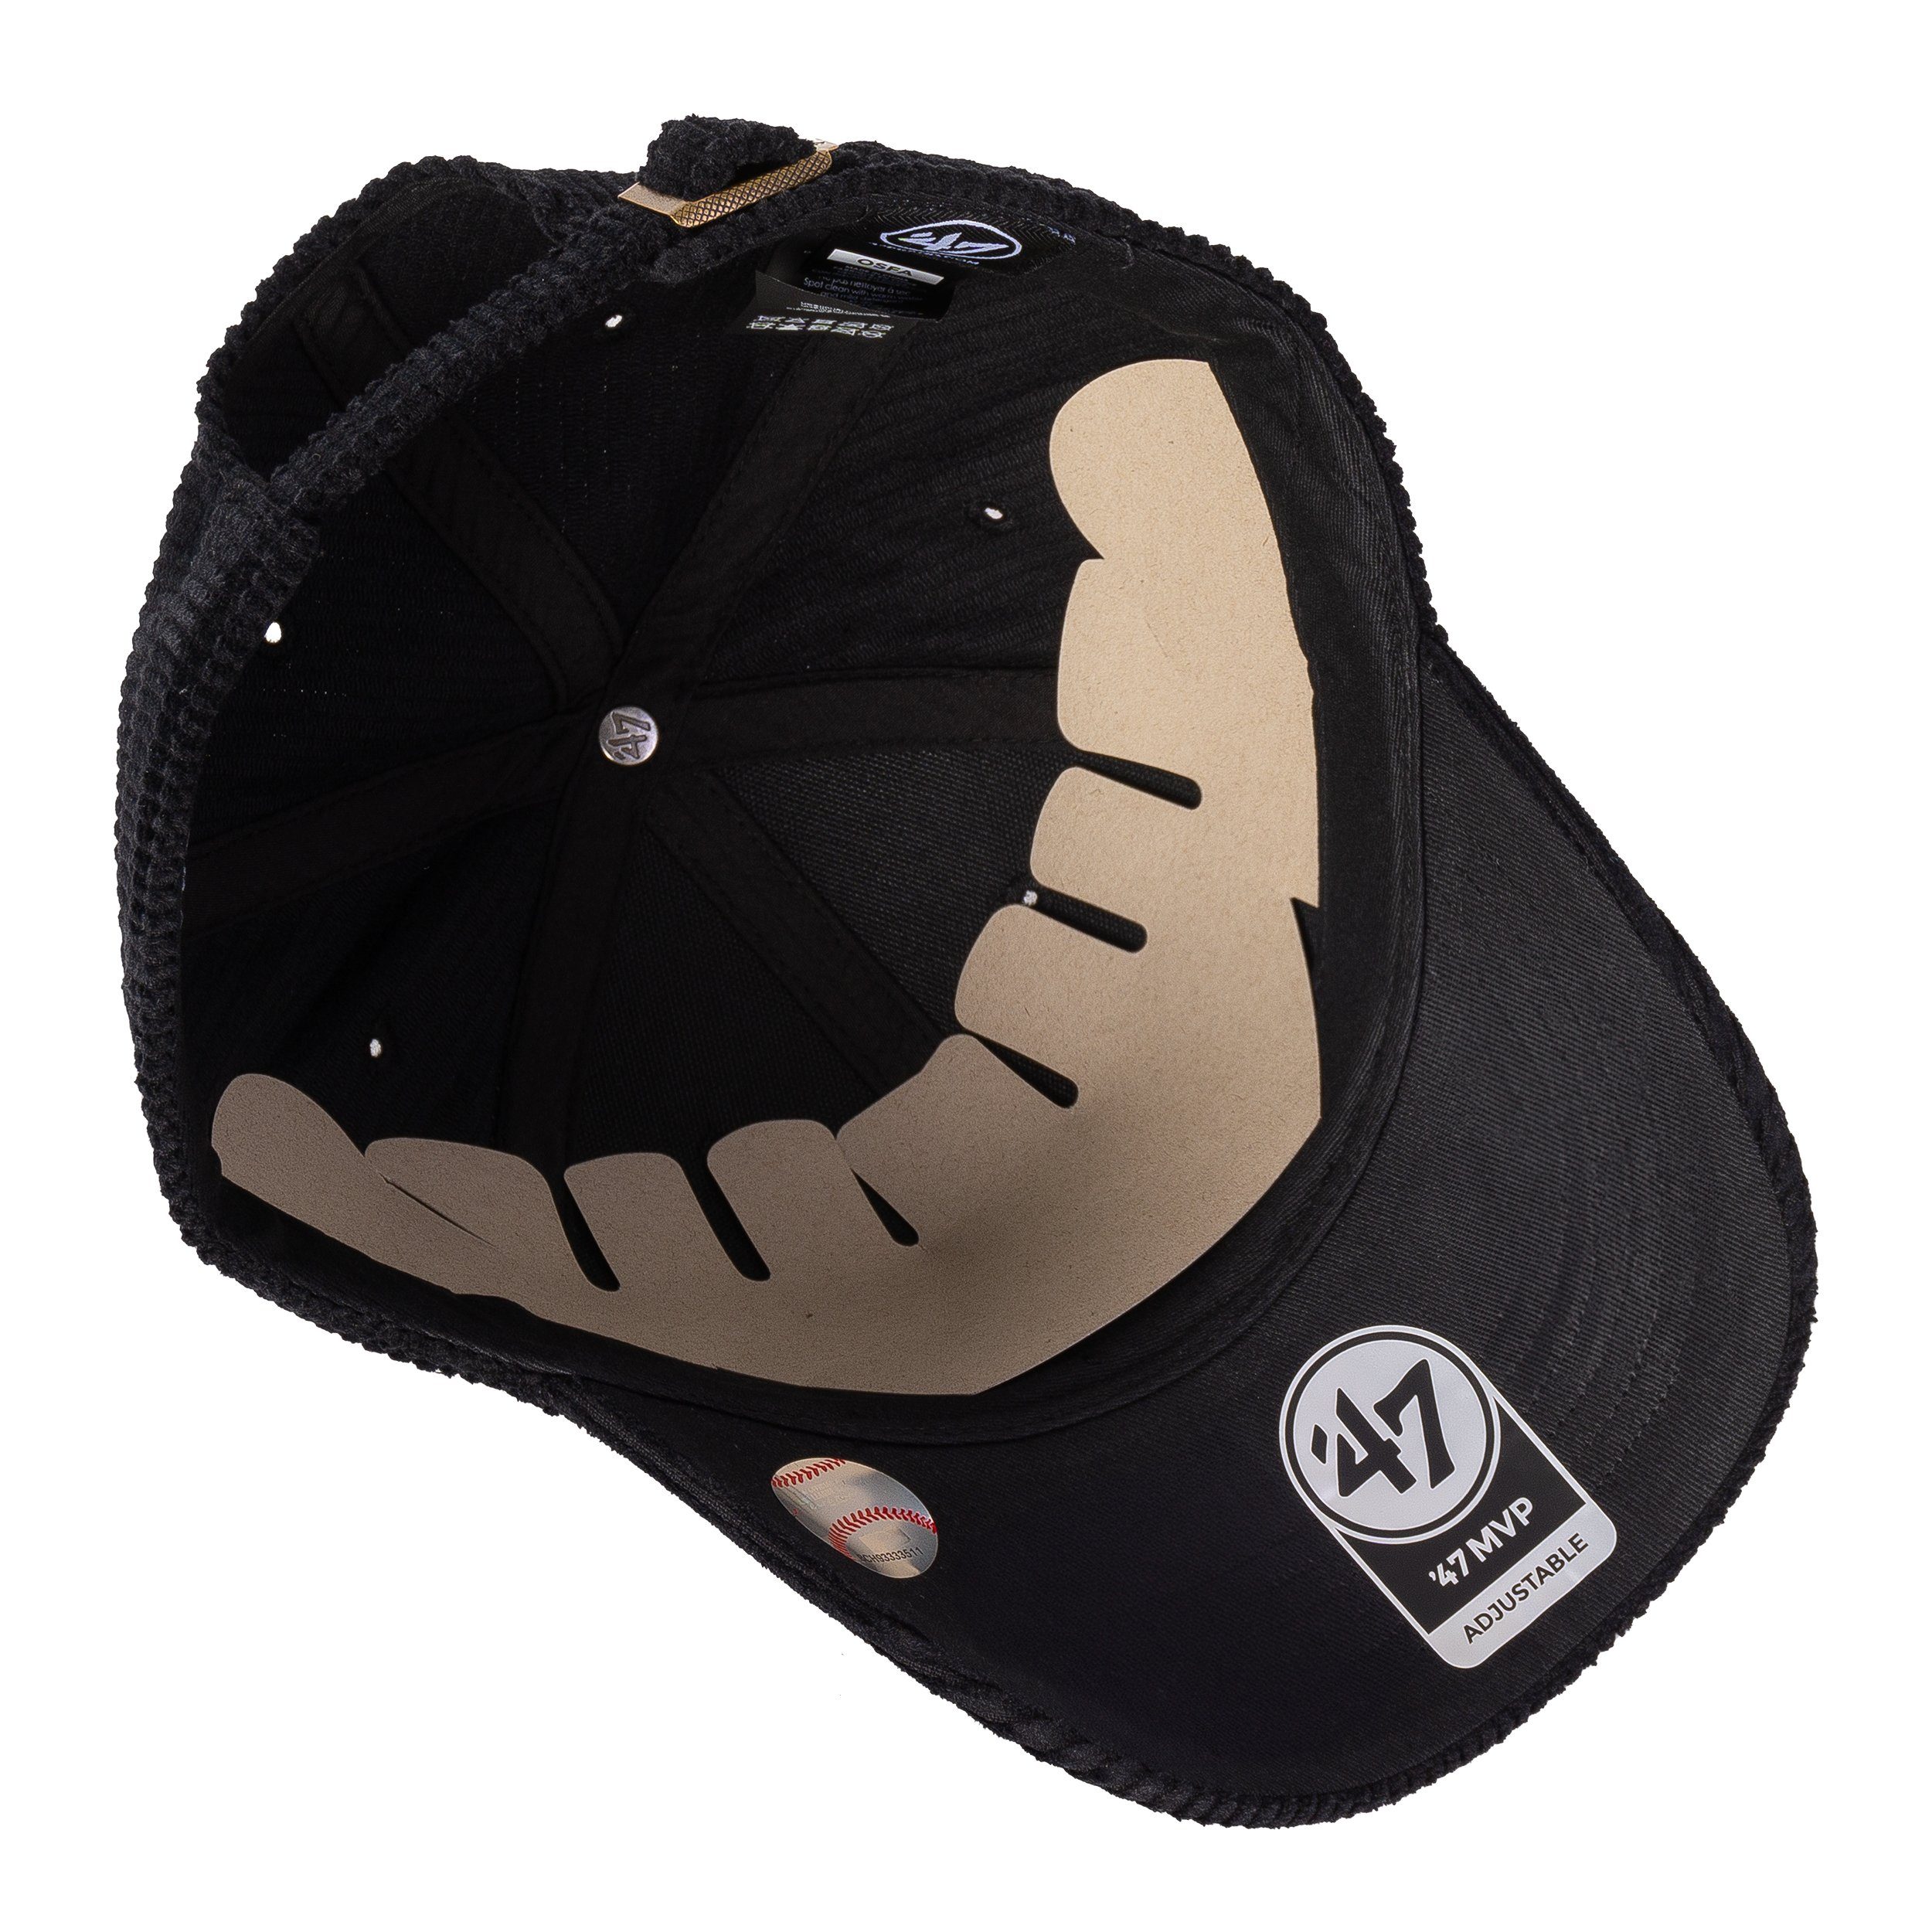 x27;47 Brand York Cap thick Yankees Cord schwarz Baseball ´47 New Brand Cap